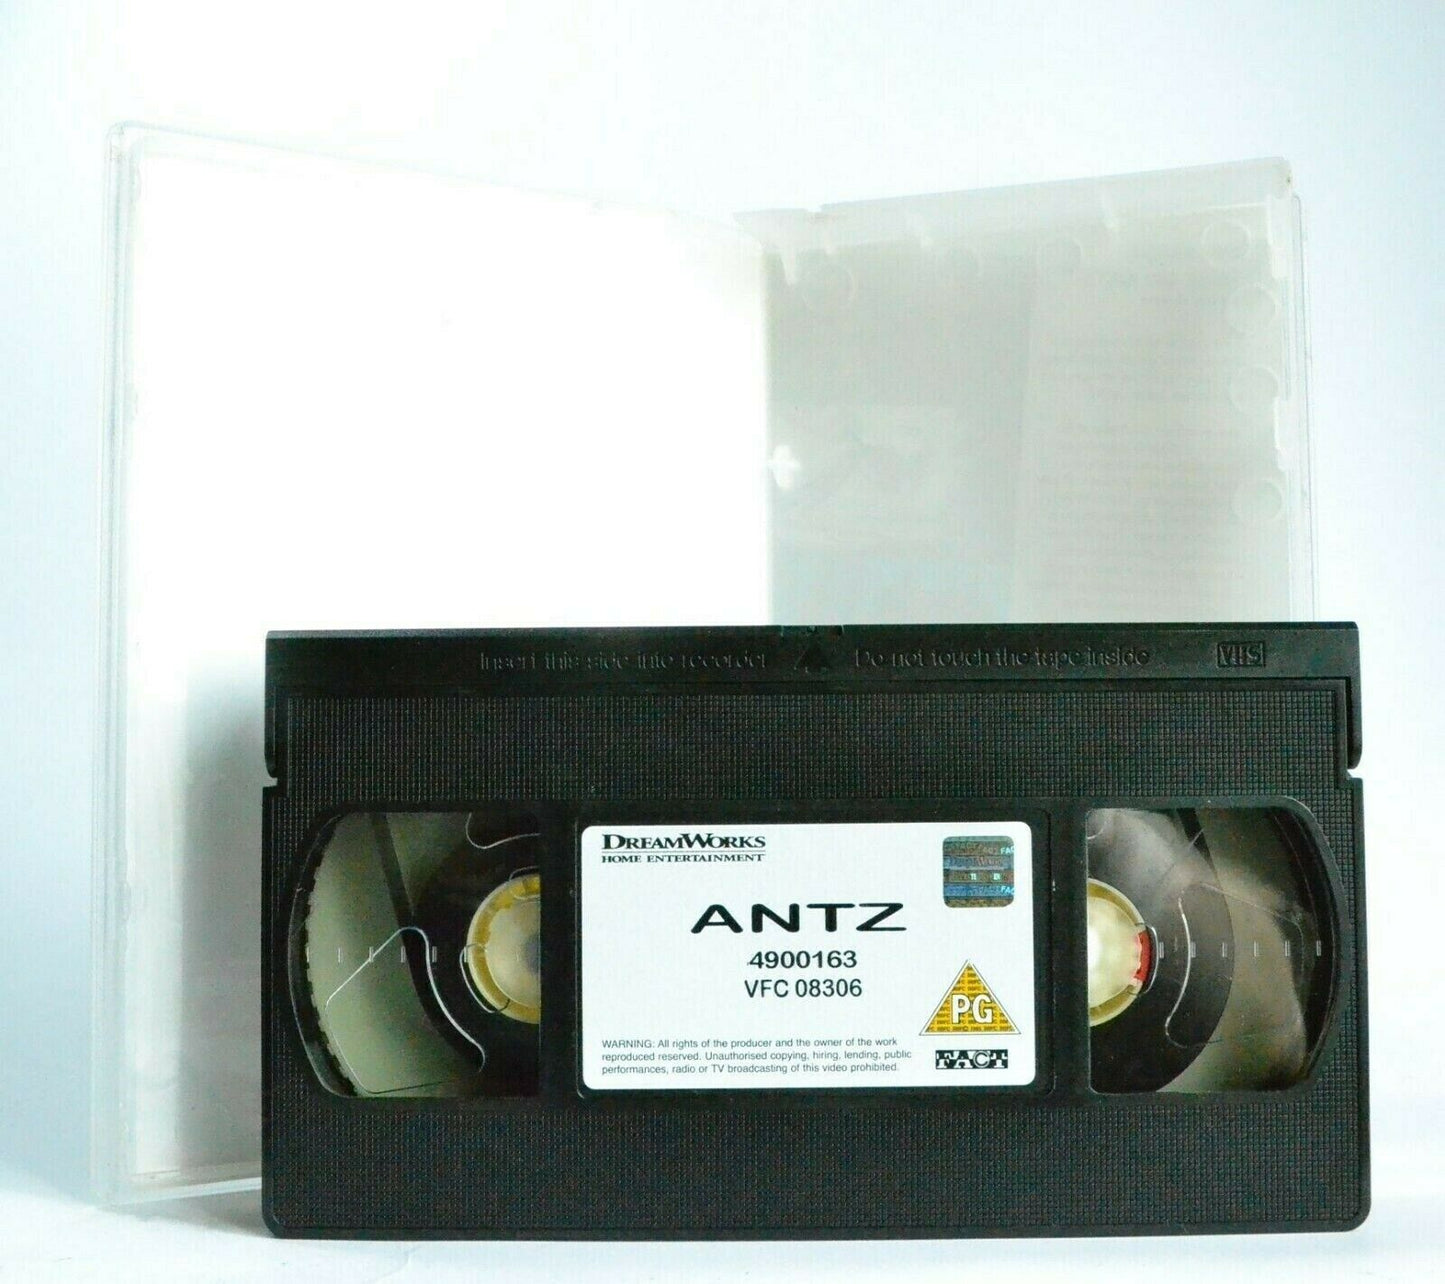 Antz: Dreamworks (2001) - Computer/Animated Adventure Comedy - Children's - VHS-